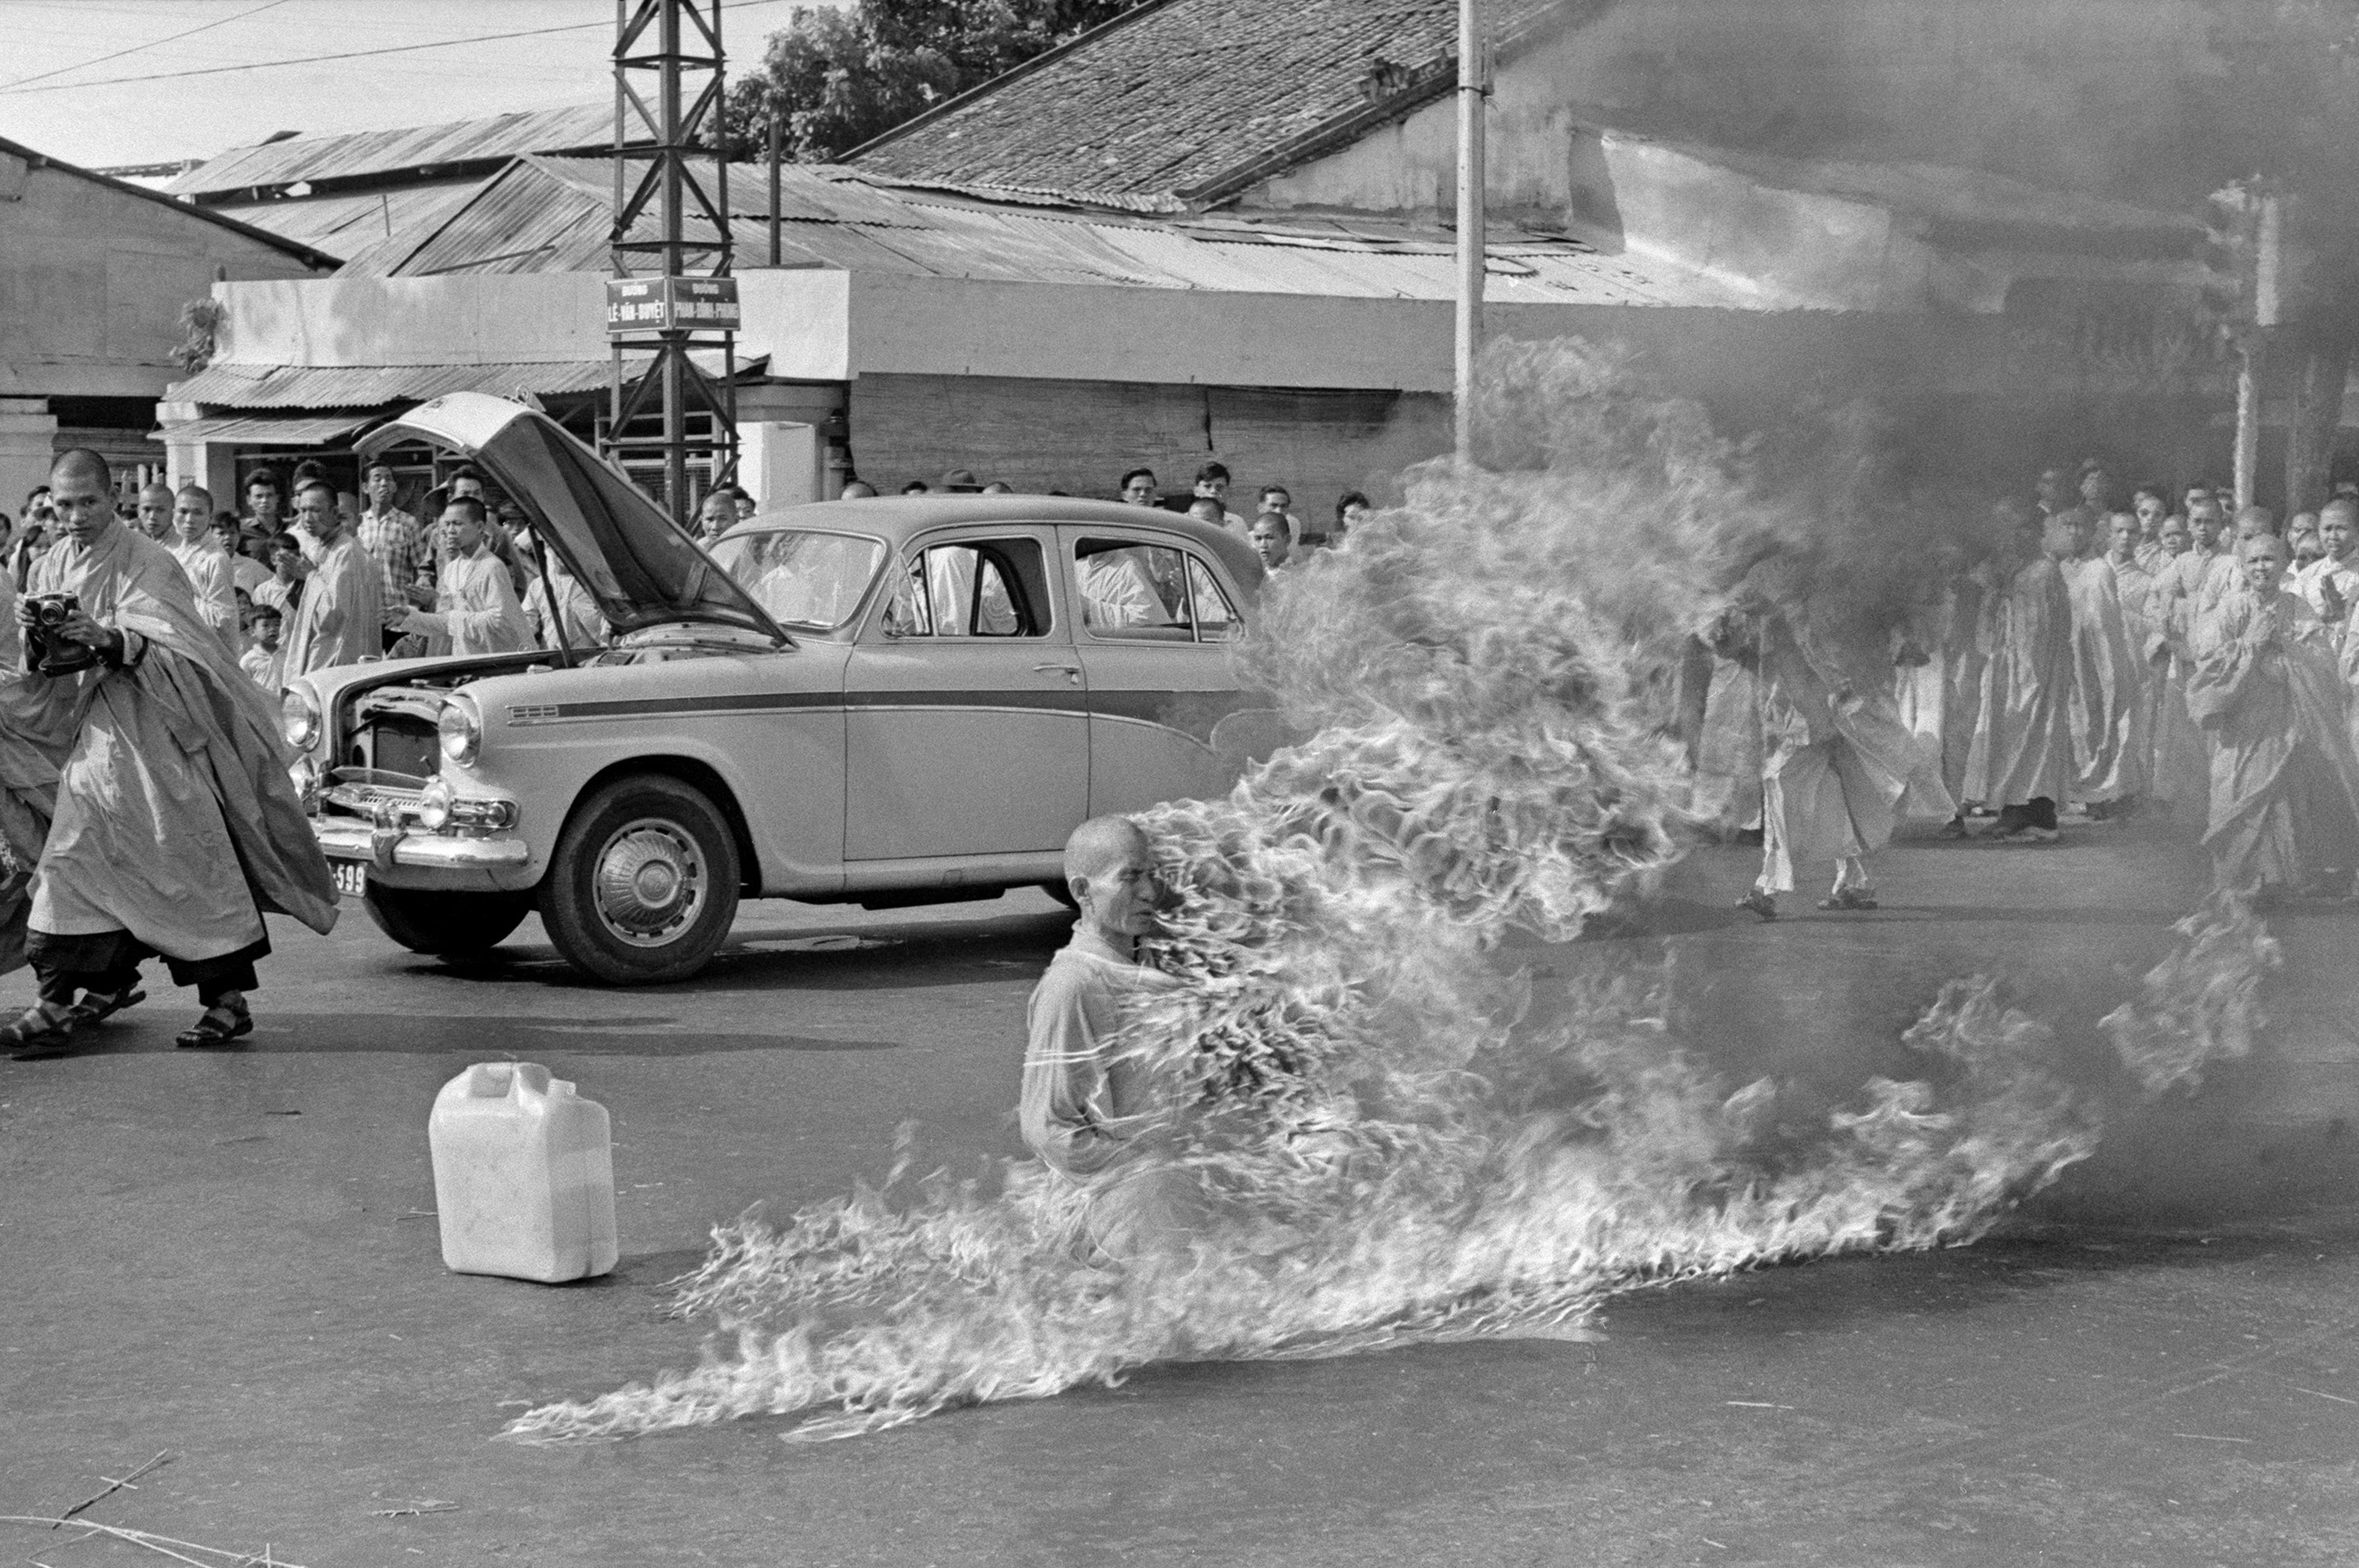 Thích Quảng Đức, a Buddhist monk, burns himself to death to protest against religious persecution, Saigon, Vietnam, 1963